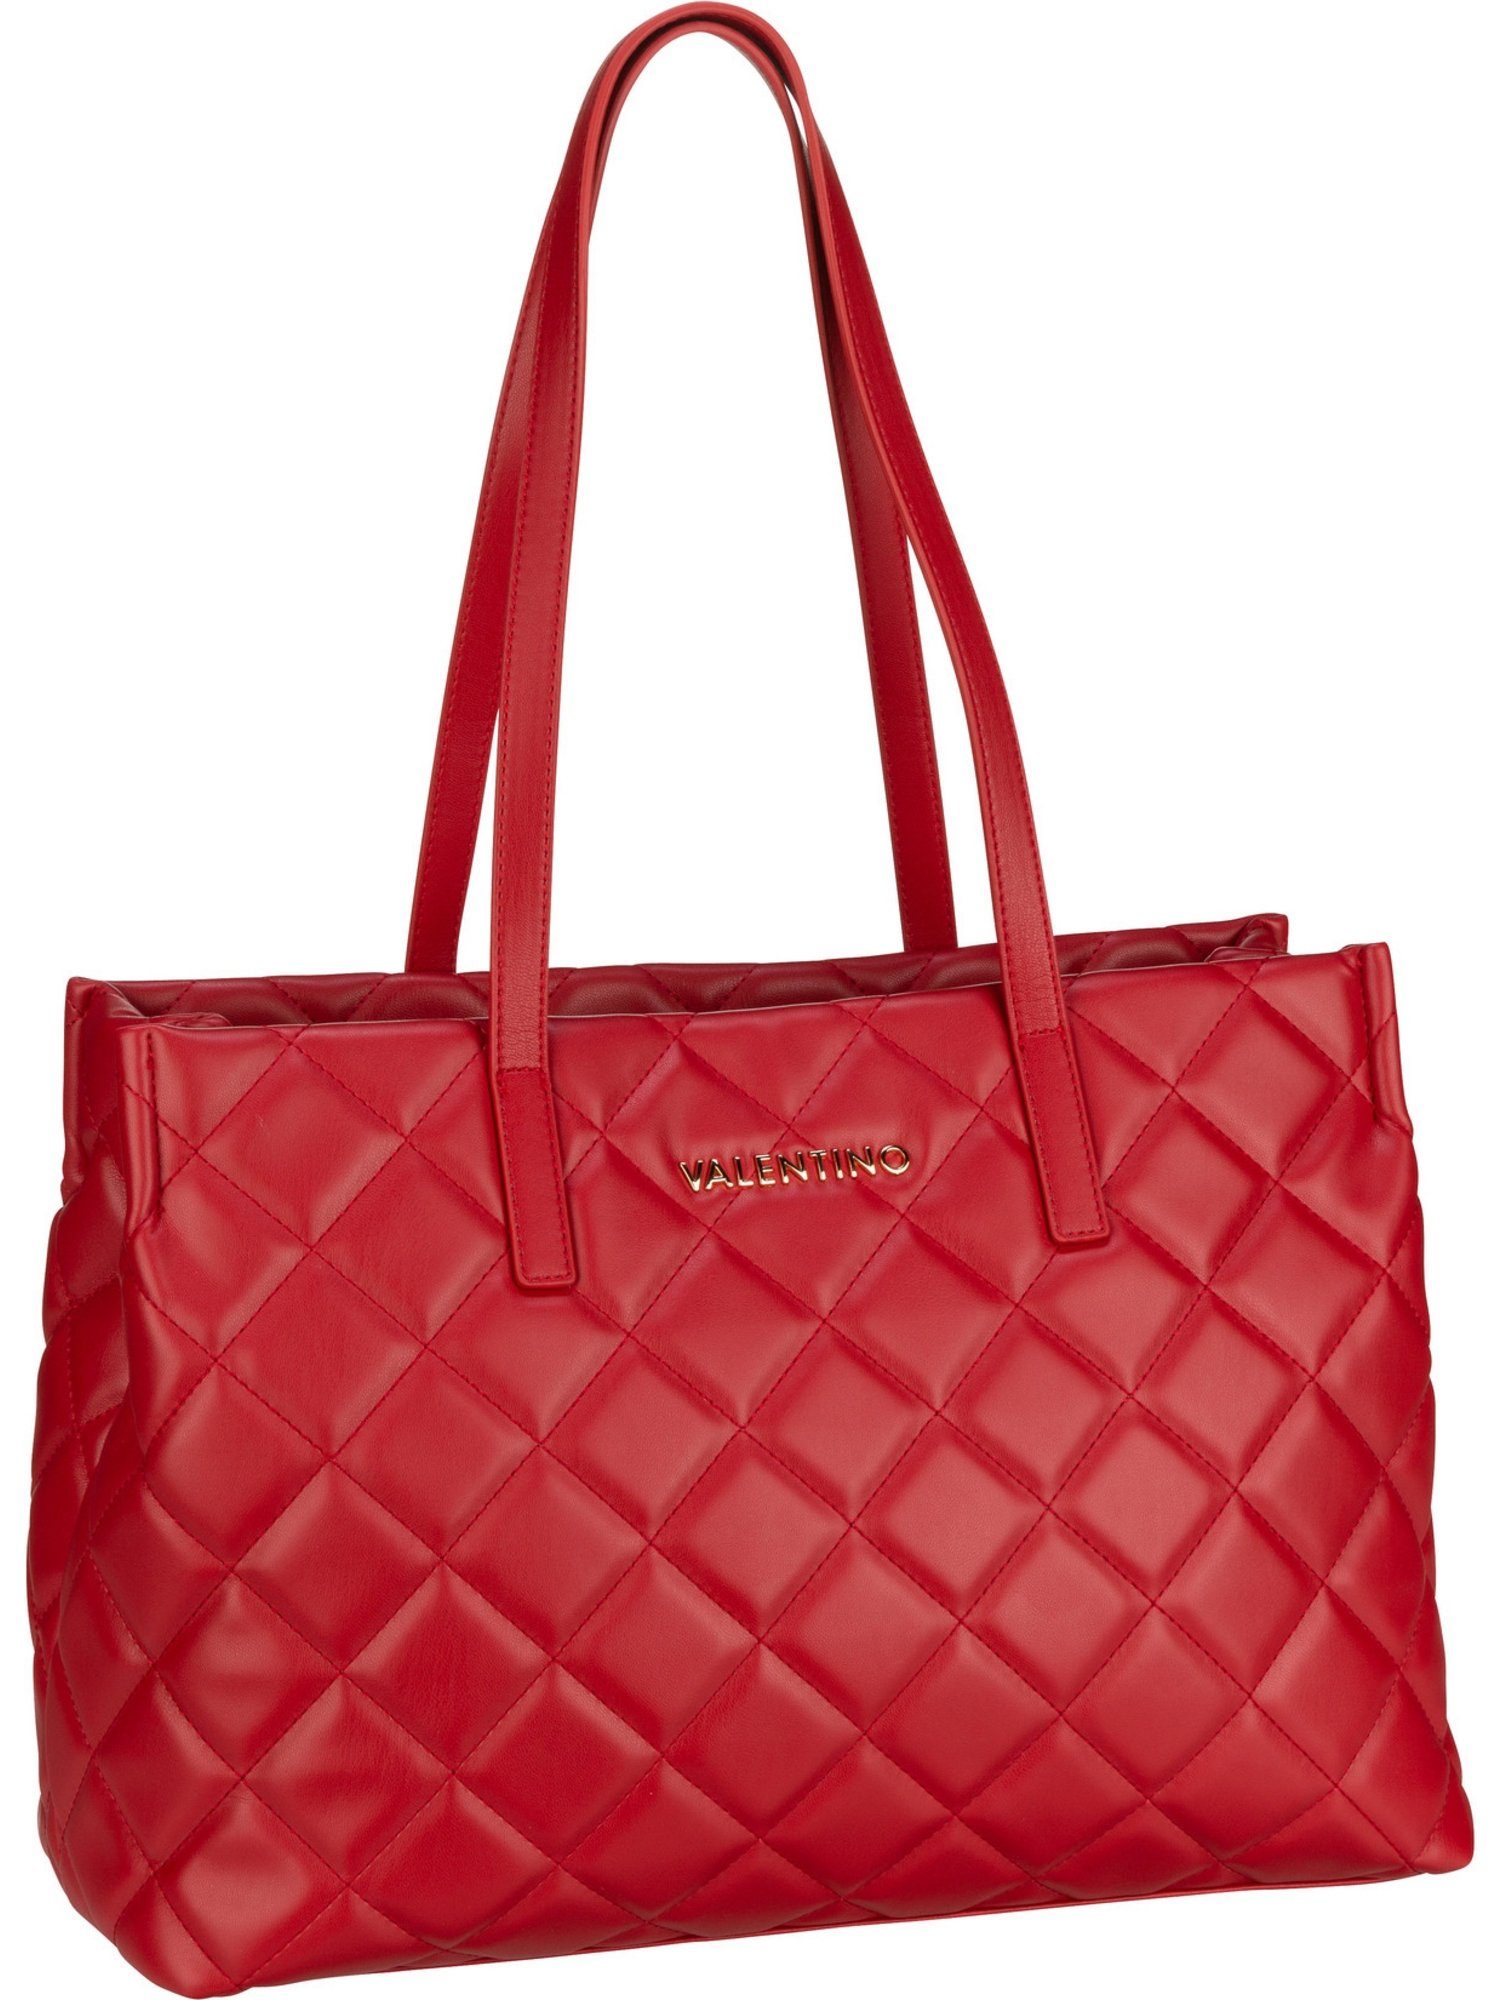 VALENTINO BAGS Handtasche Ocarina Shopping K10, Shopper Rosso